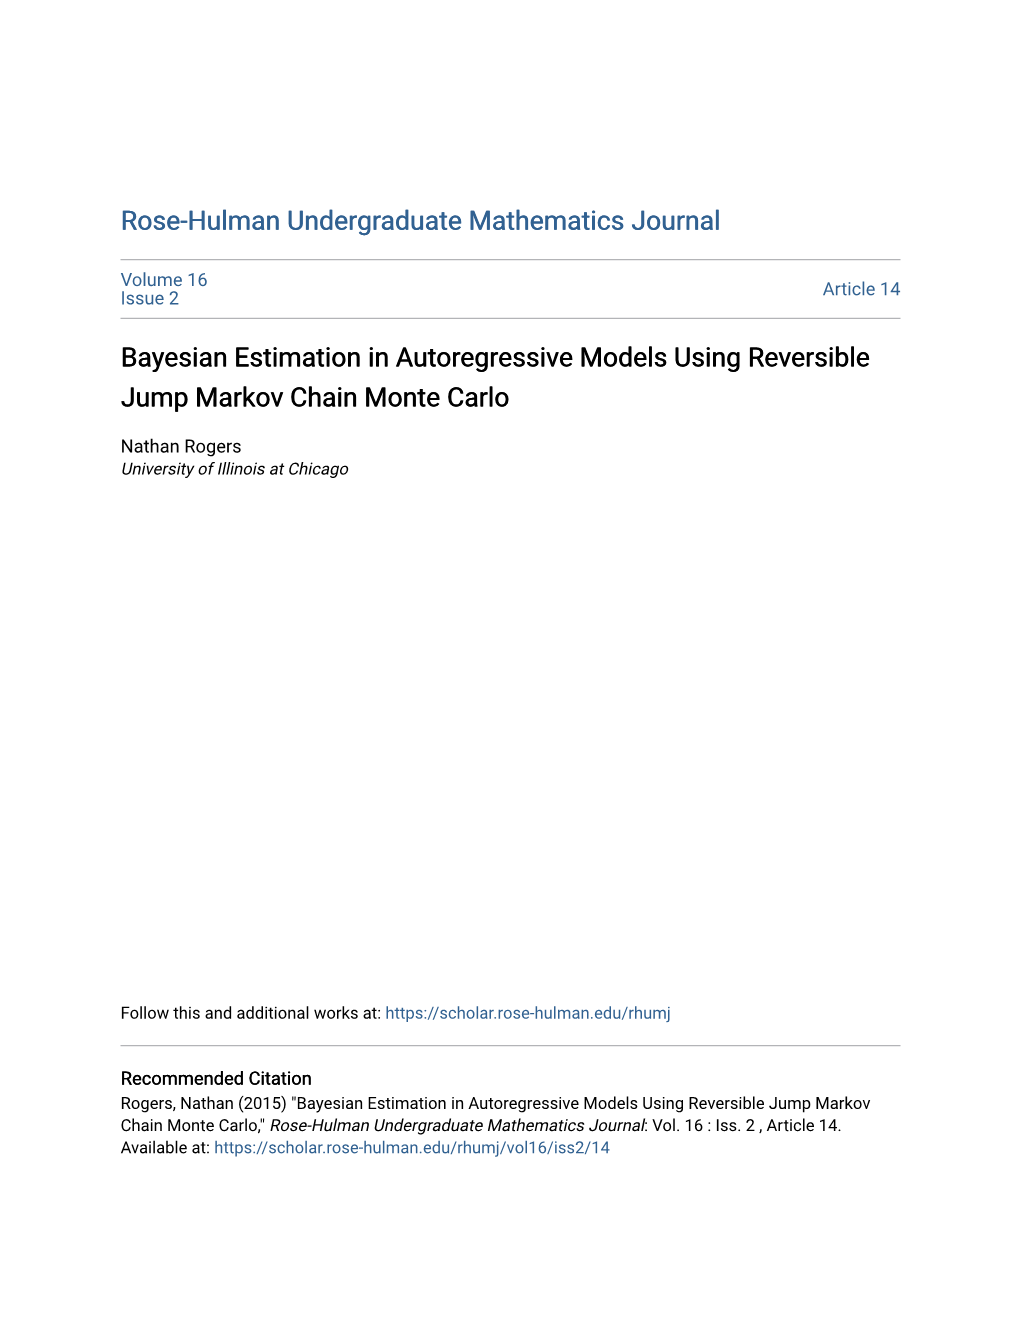 Bayesian Estimation in Autoregressive Models Using Reversible Jump Markov Chain Monte Carlo